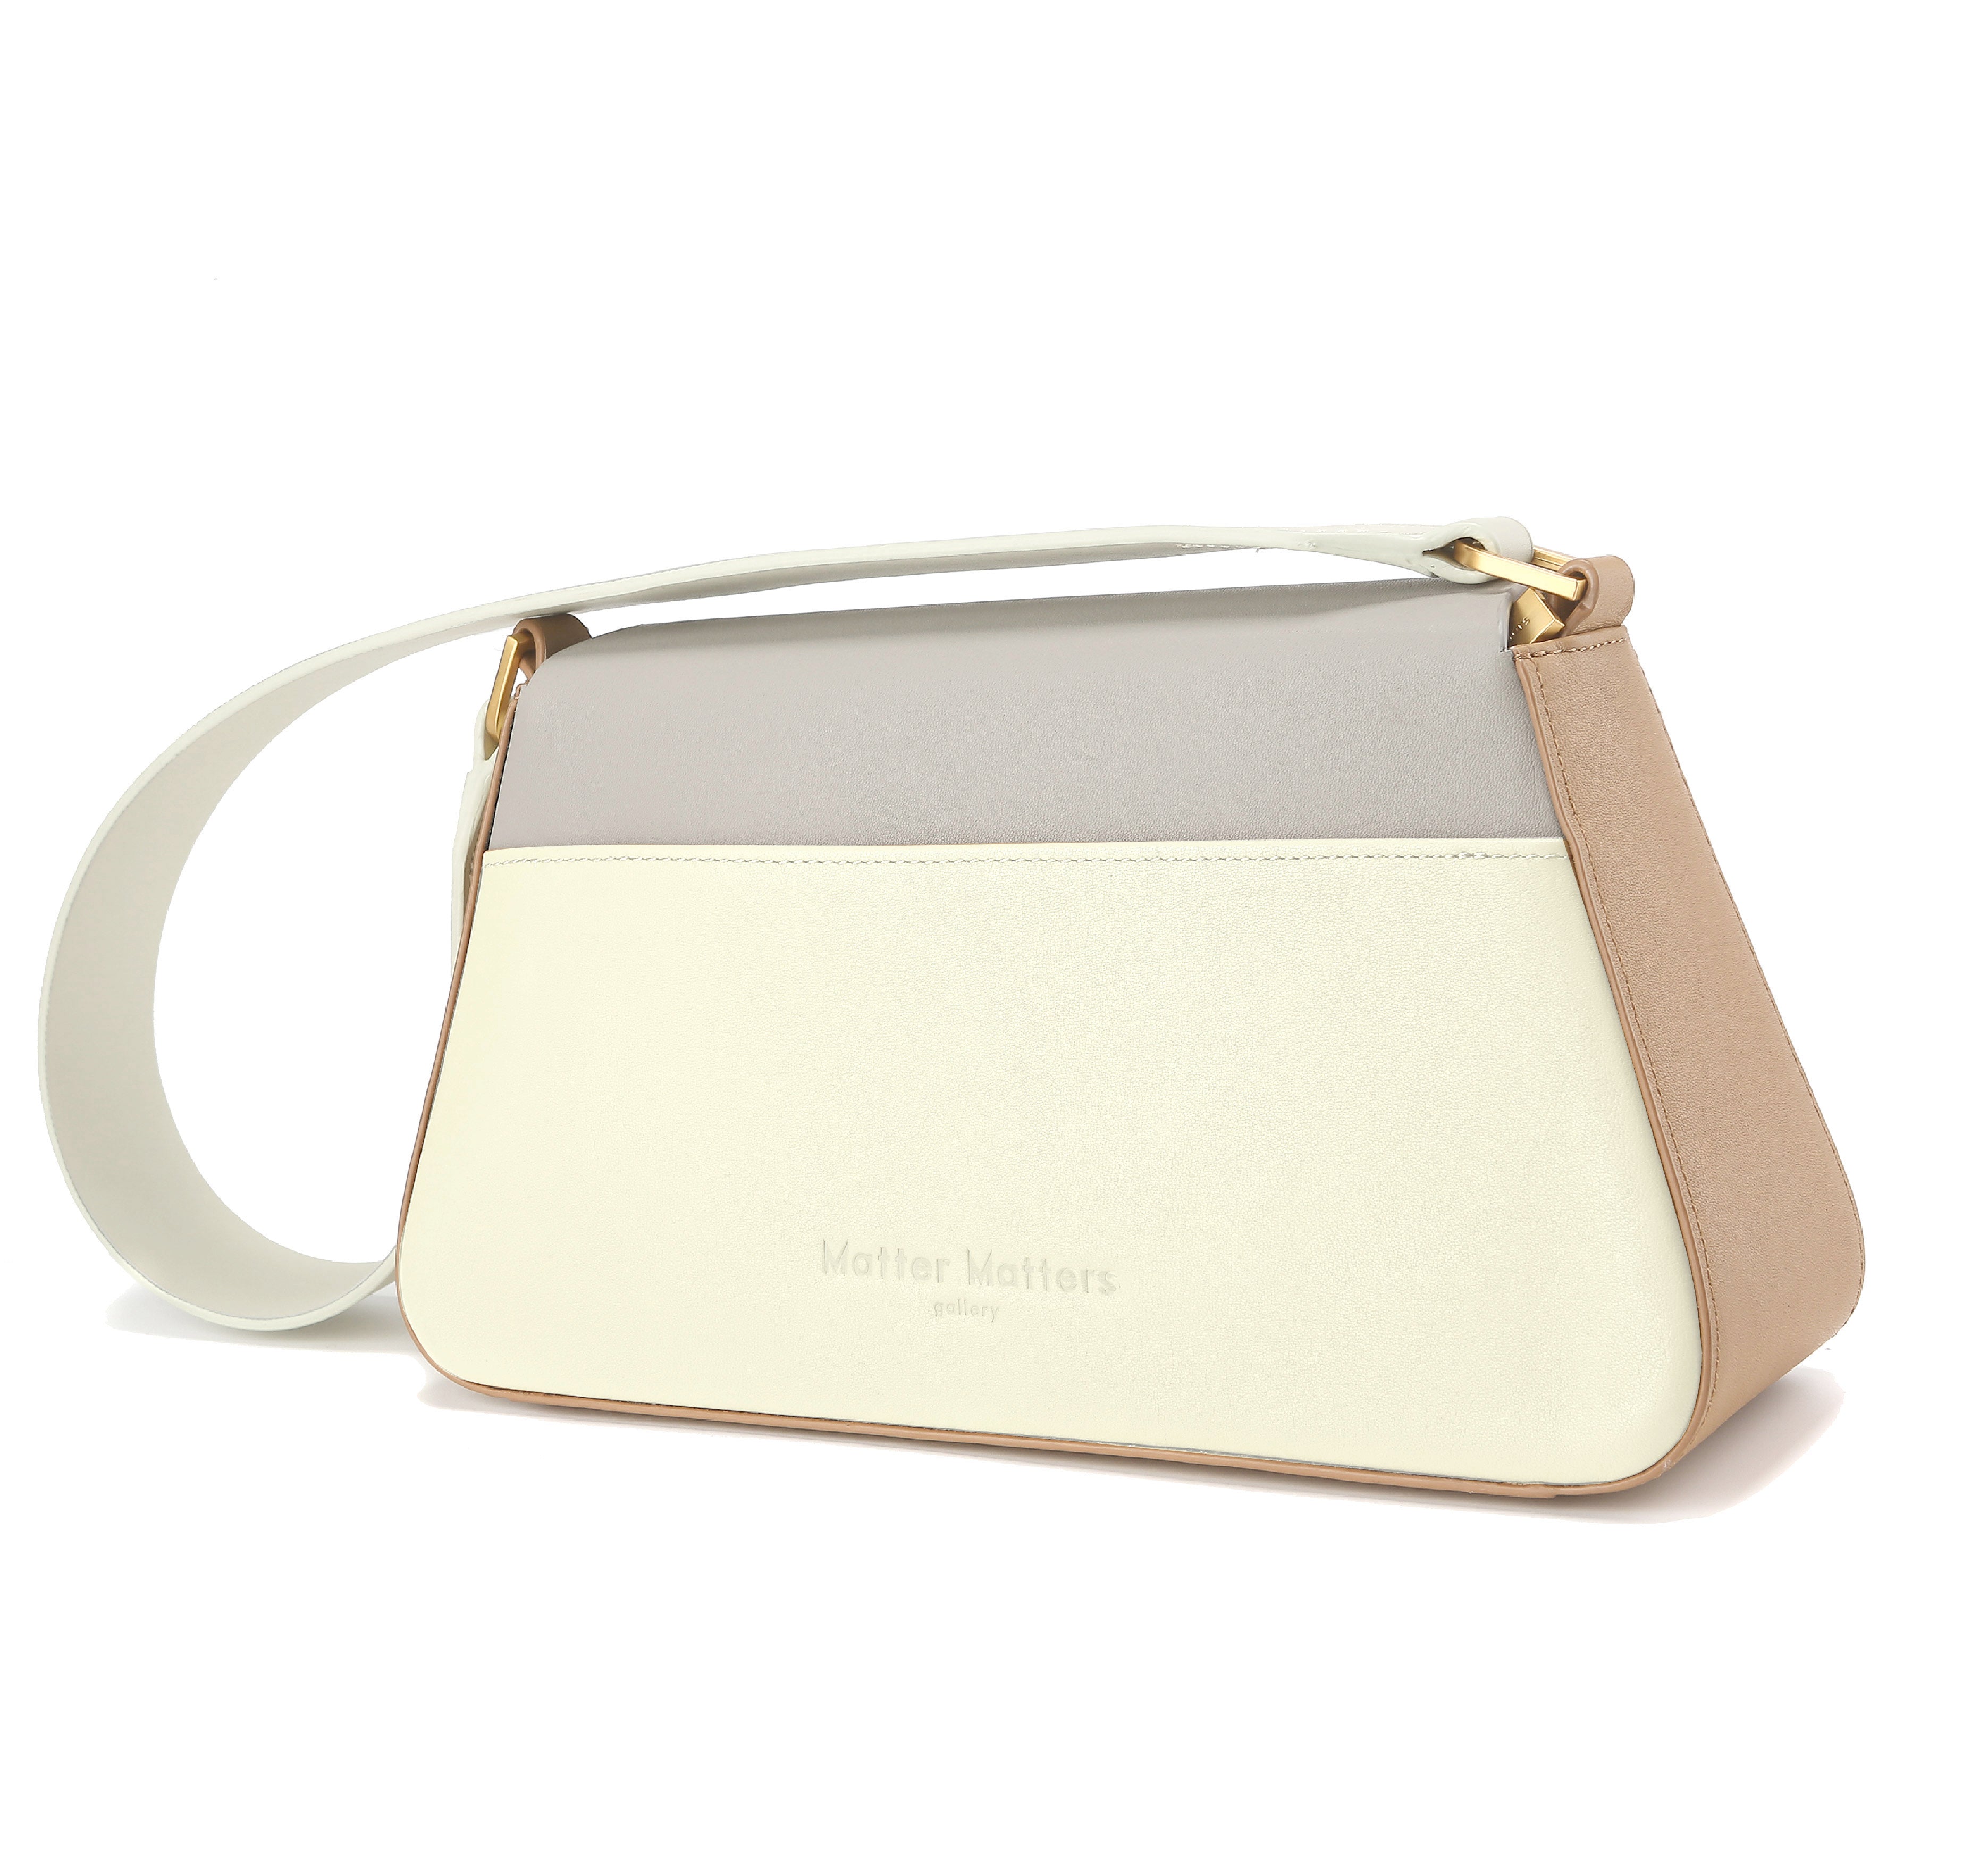 Flap BB Soft medium shoulder bag in Peach leather – 10corsocomo